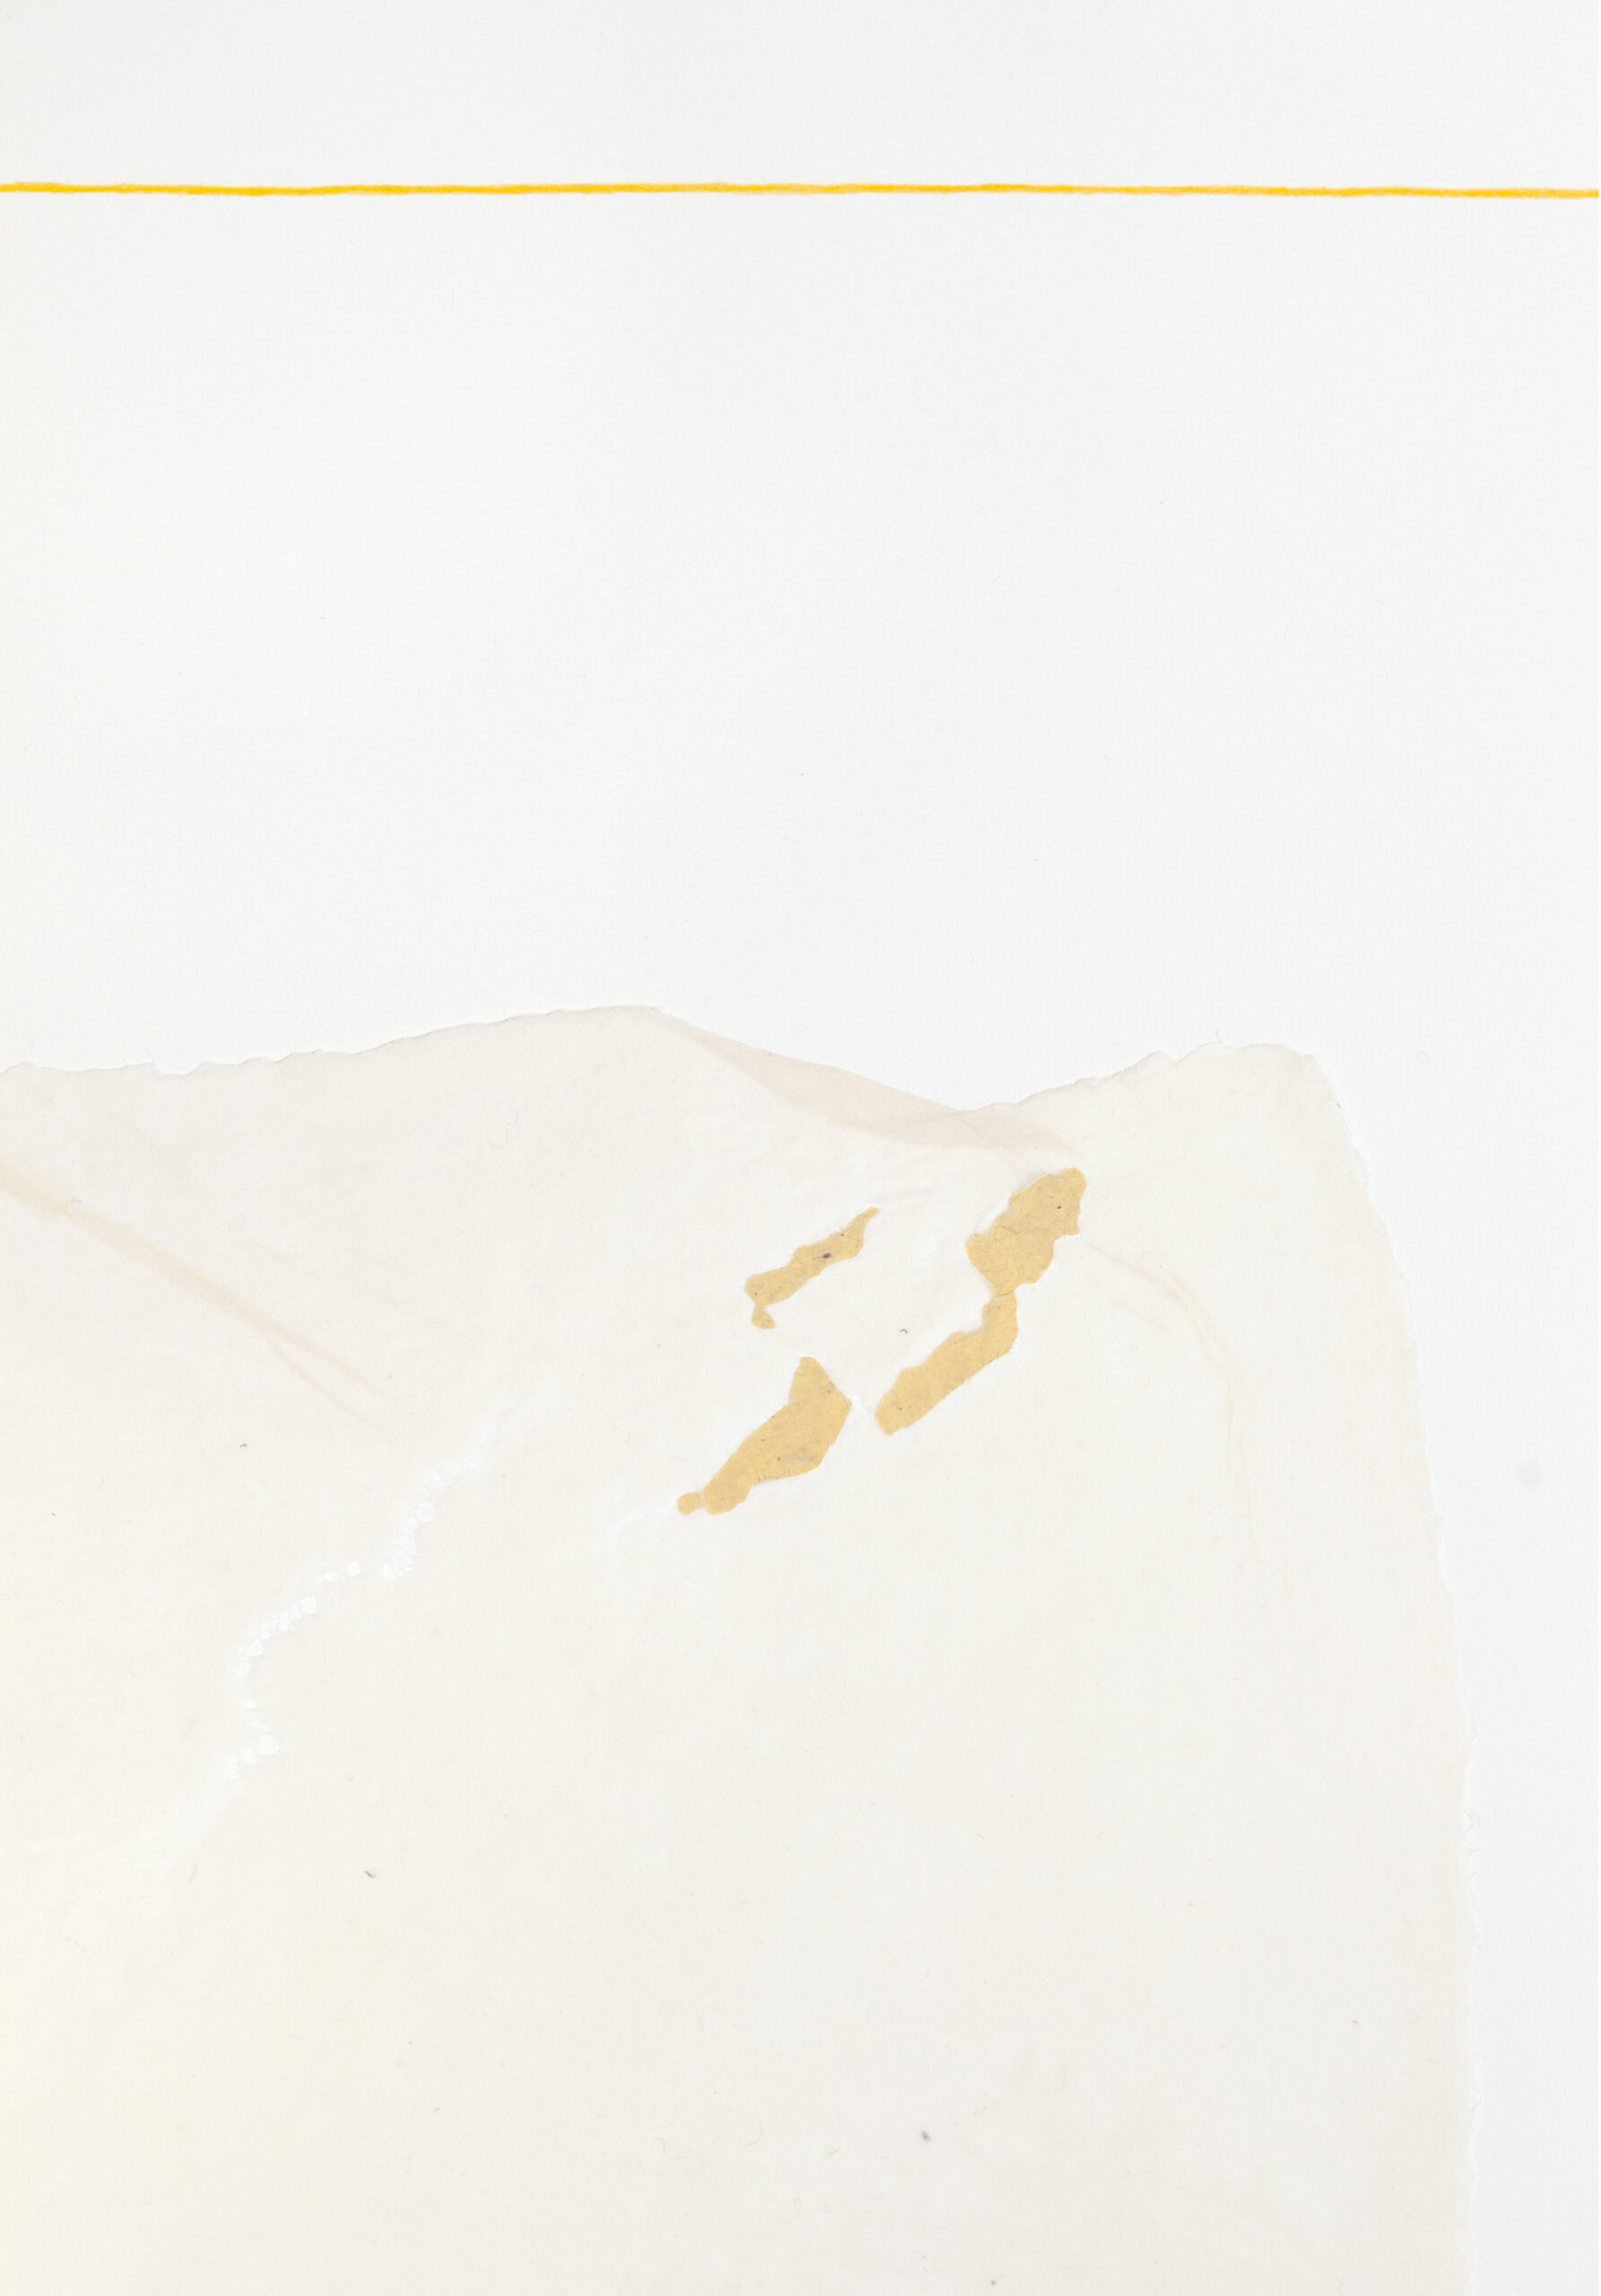 Miriam Salamander, paperwork, collage, yelloe pencil drawing on white handmade abaca paper